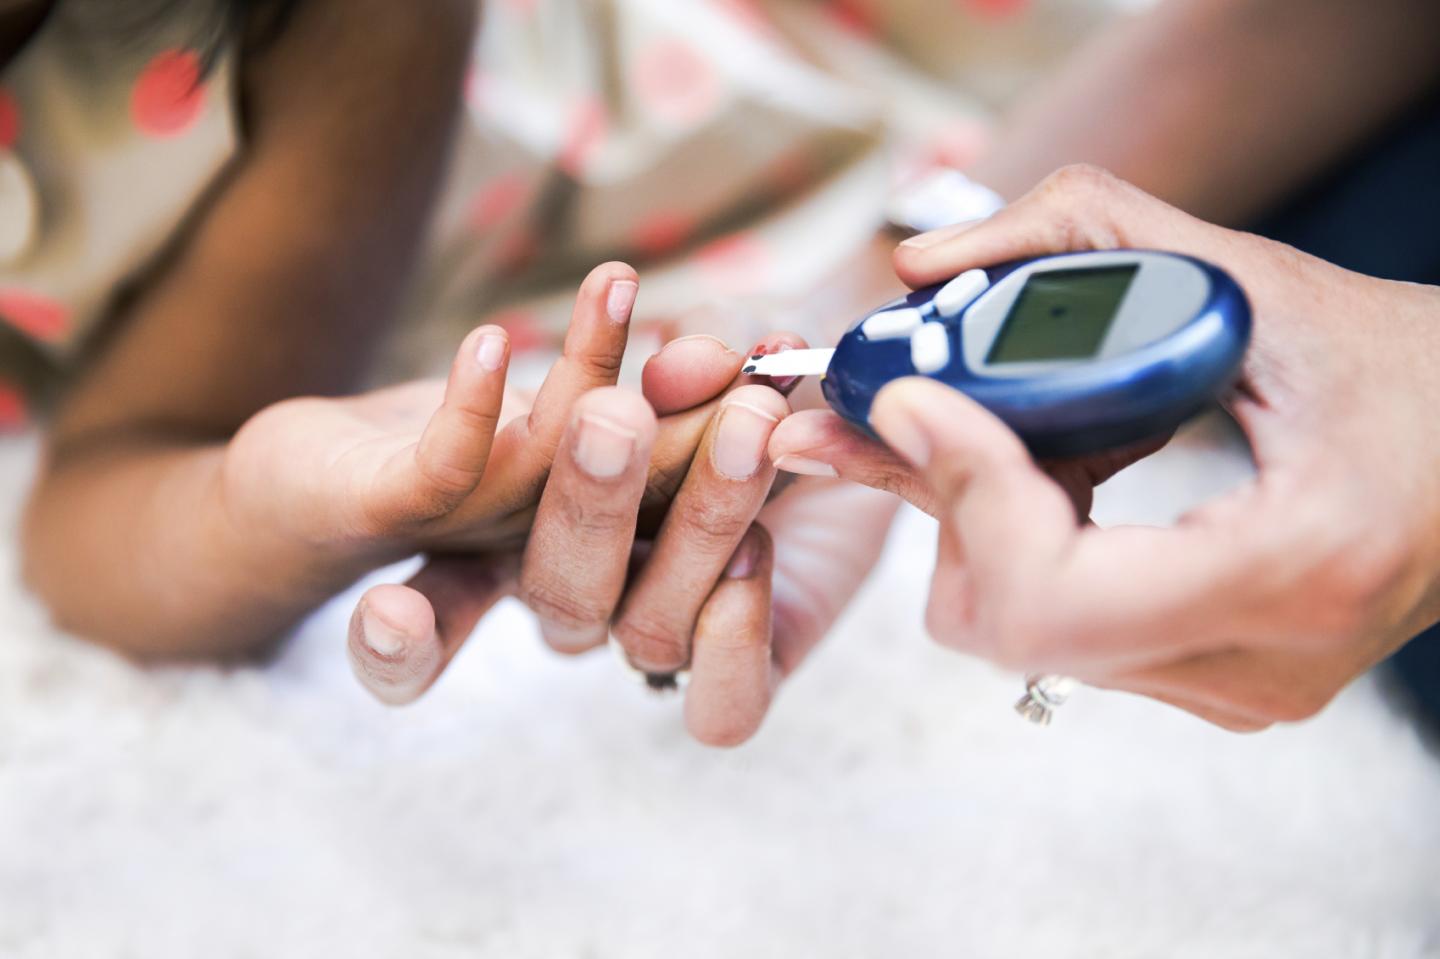 A Better Blood Sugar Test for Diabetes